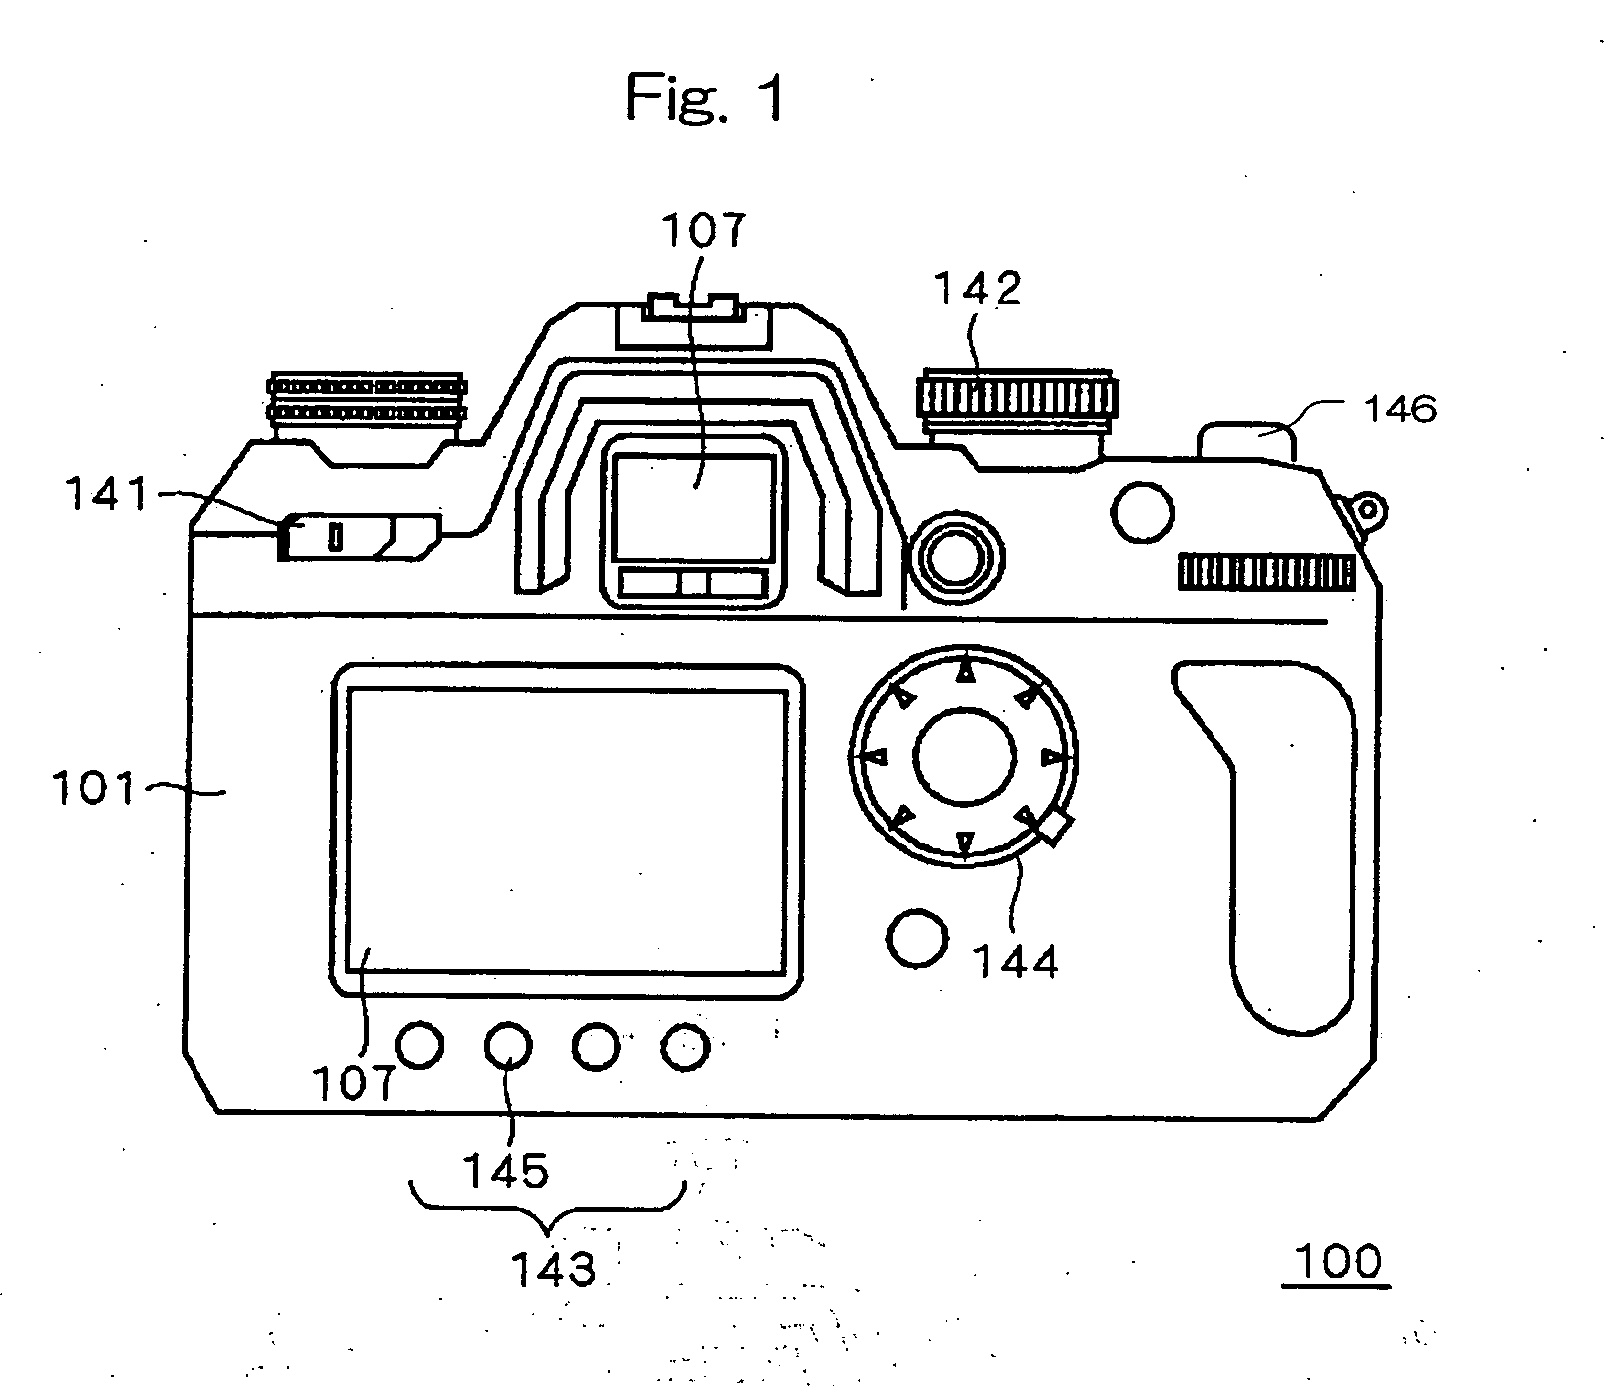 Digital single-reflex camera